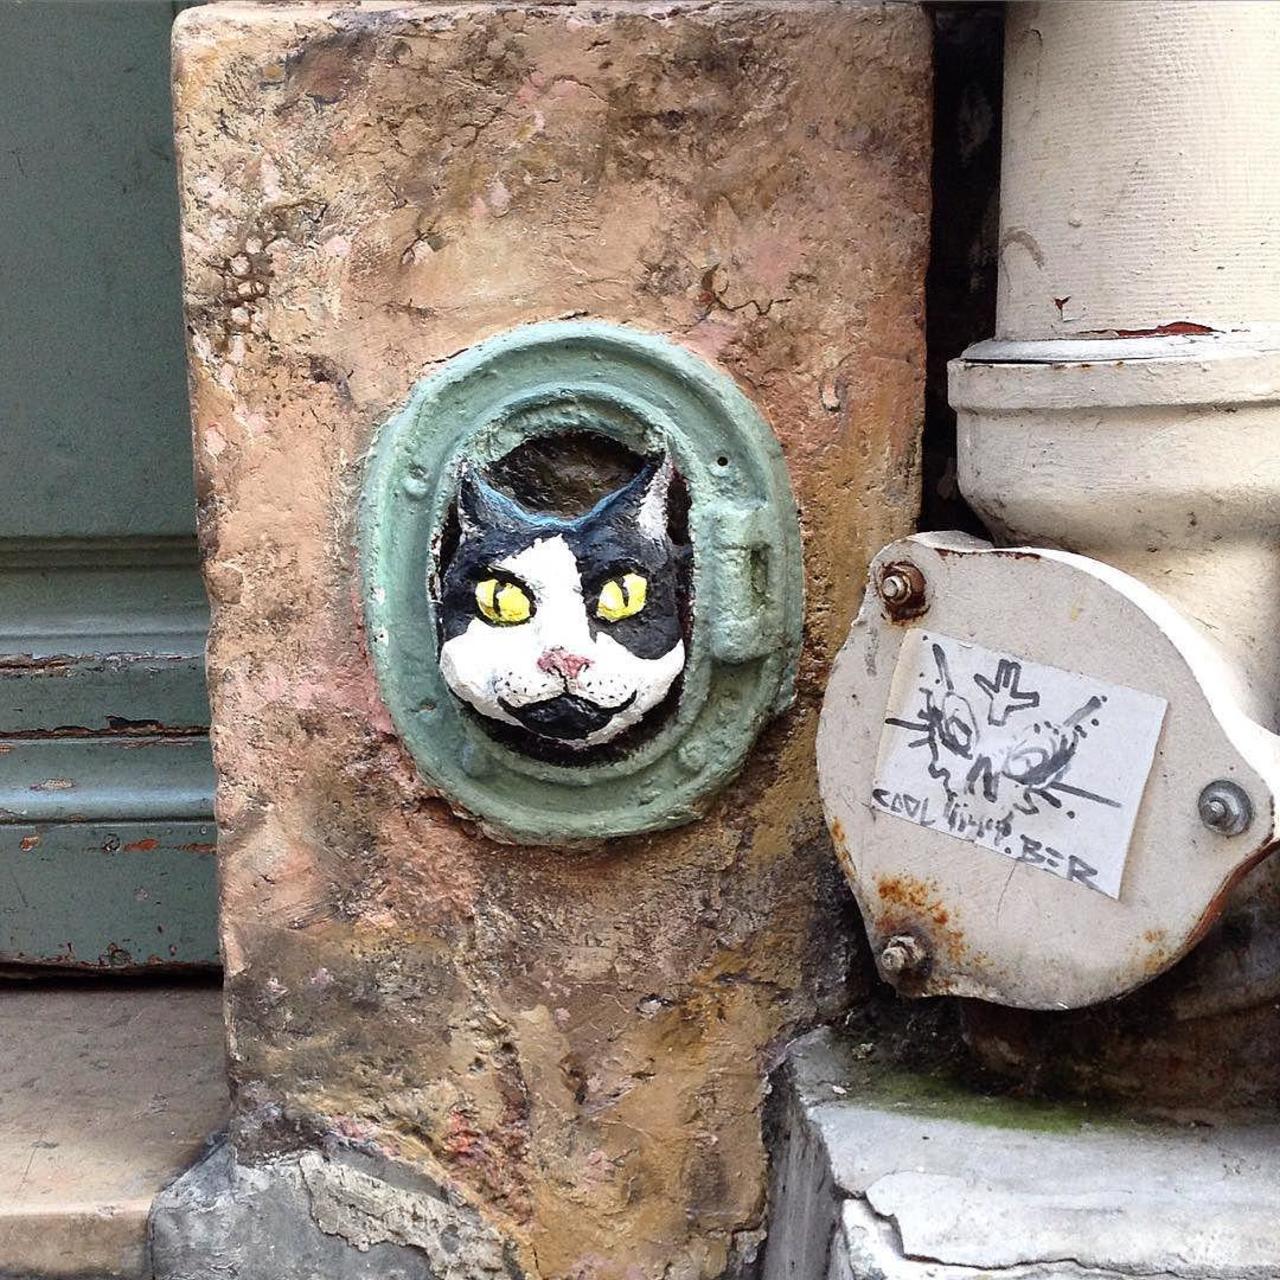 #Paris #graffiti photo by @vgsman http://ift.tt/1MyMRHQ #StreetArt http://t.co/oCvdSDTc00